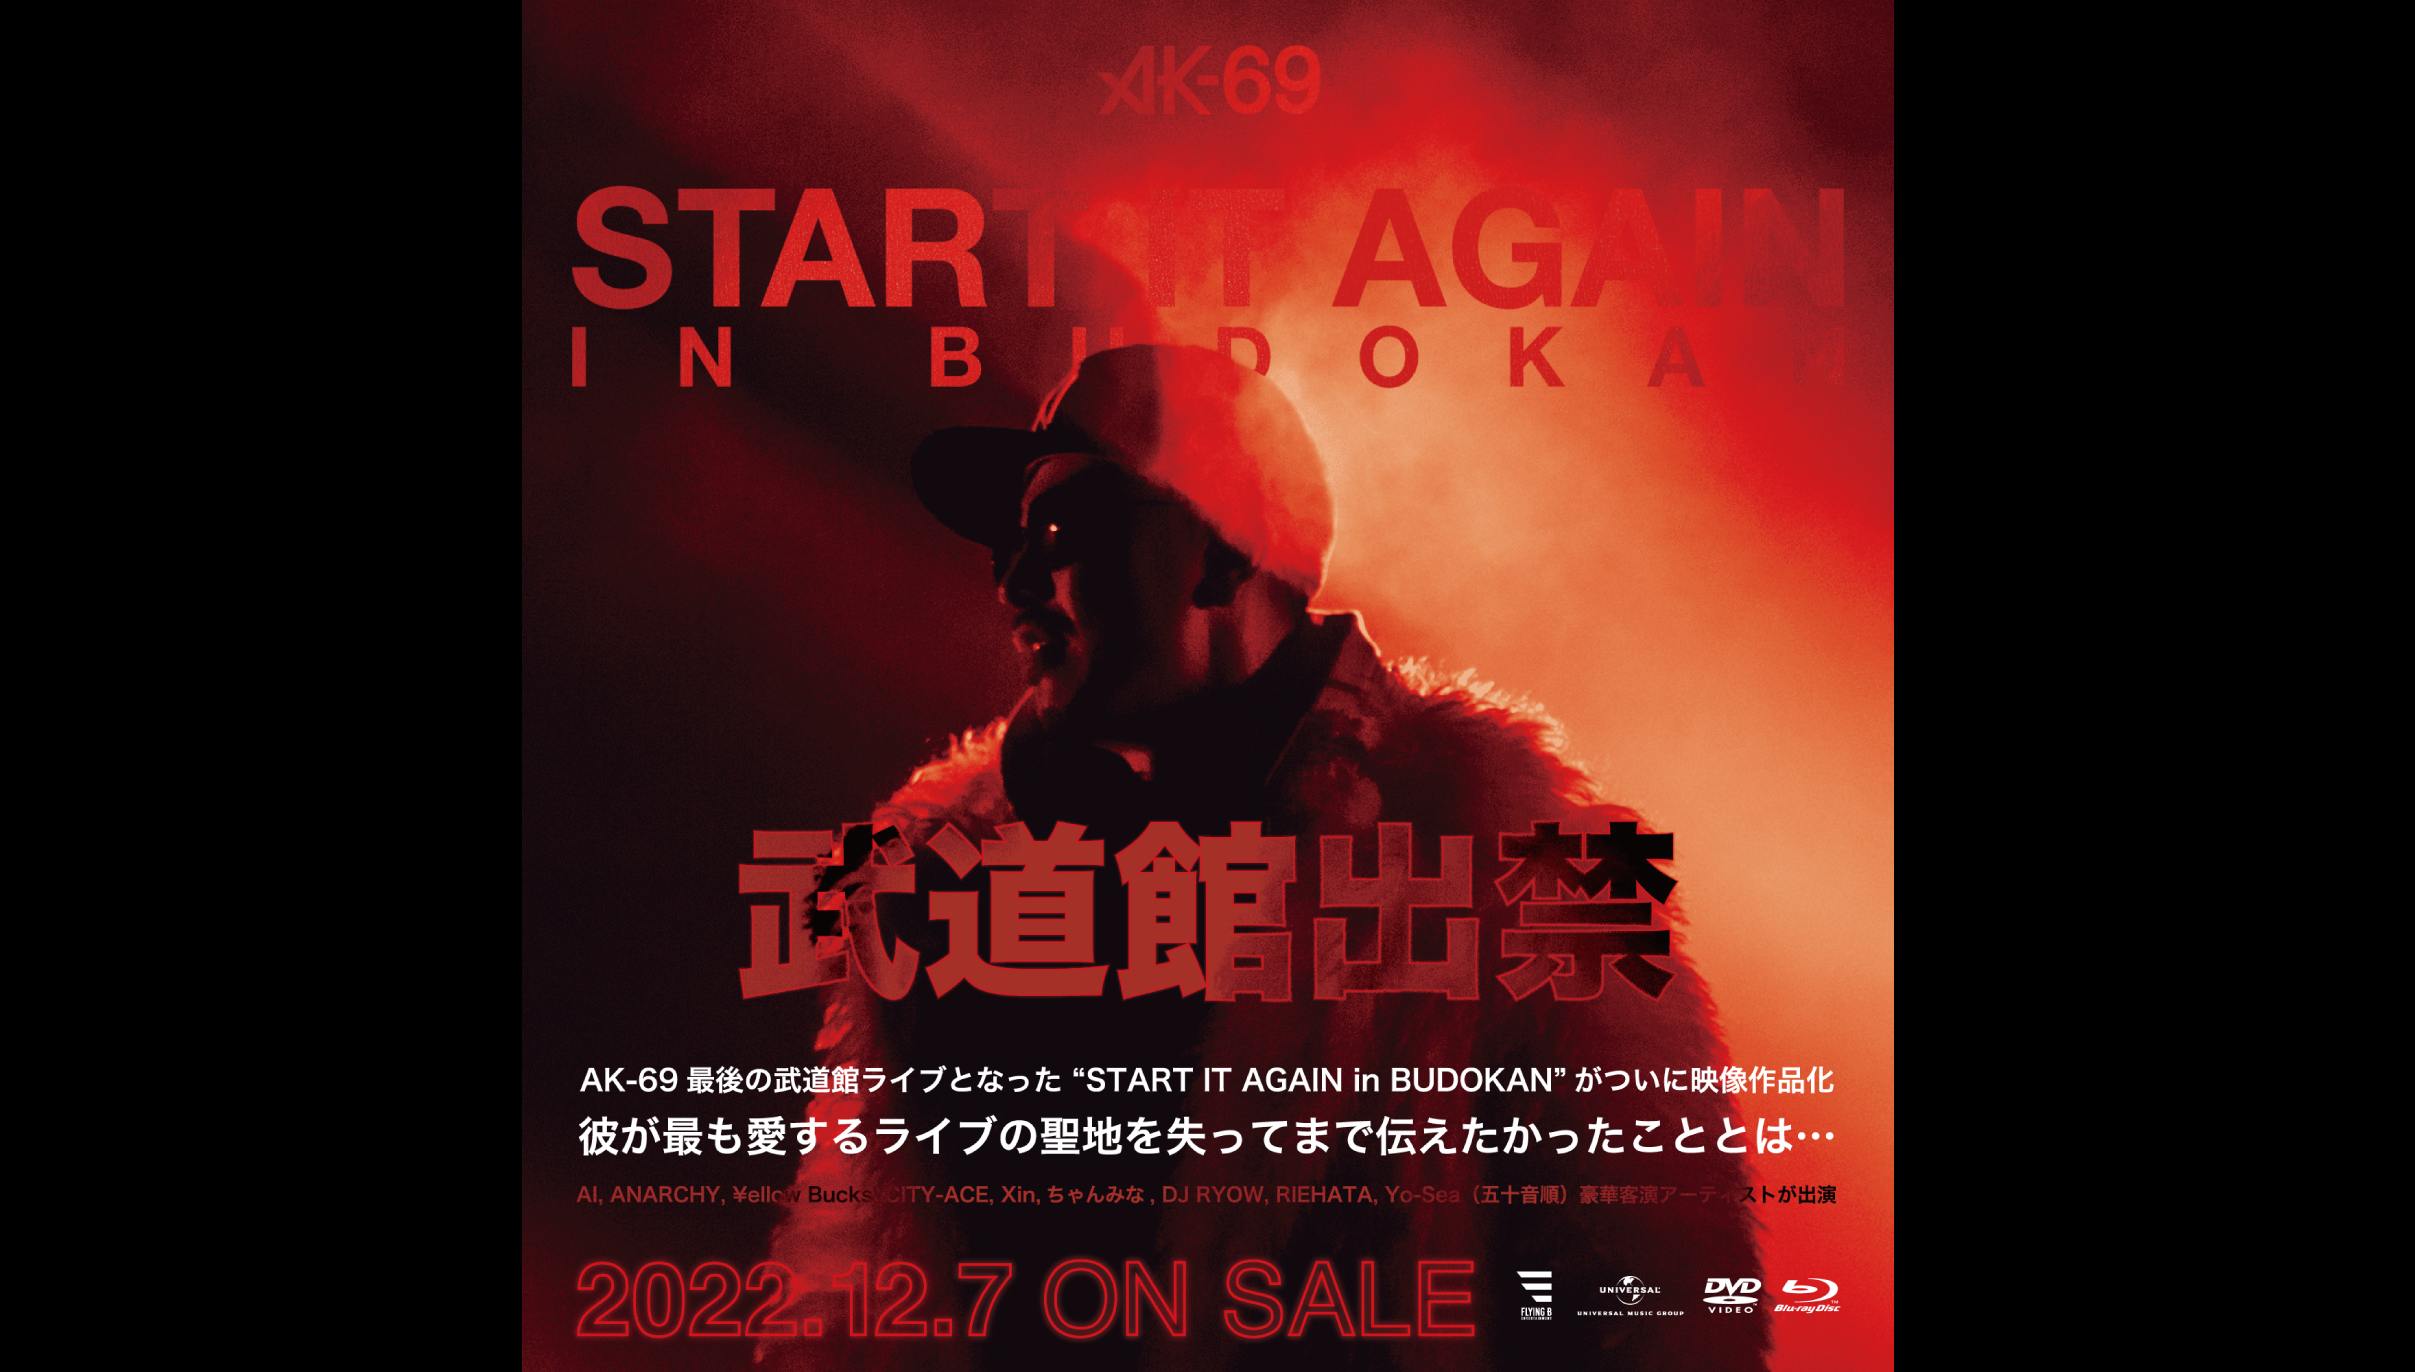 AK-69】ライブDVD「START IT AGAIN in BUDOKAN」発売決定!! - 360concept